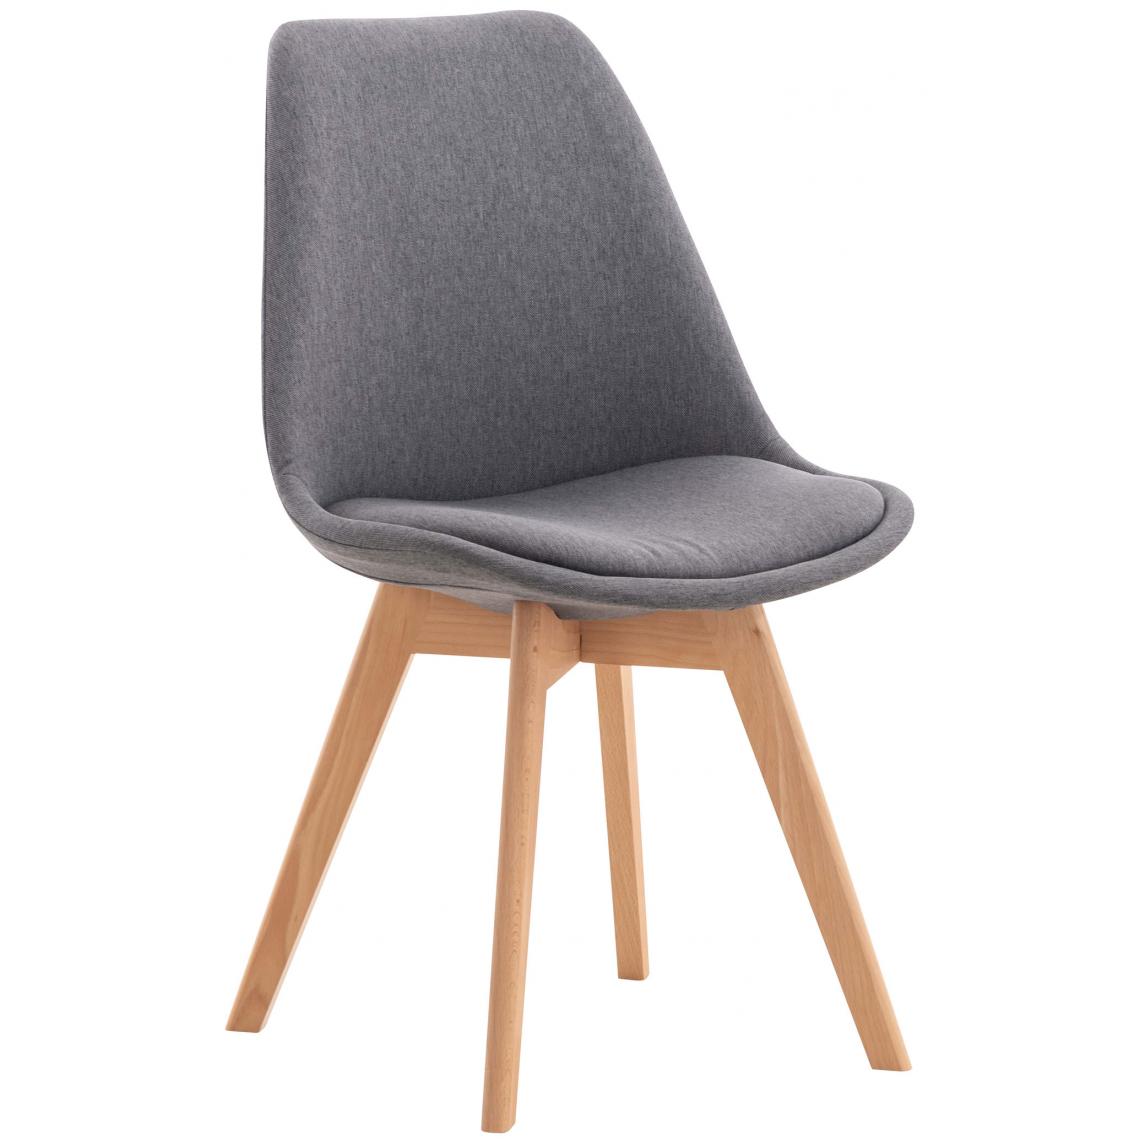 Icaverne - Moderne Chaise en tissu serie Oulan-Bator couleur gris - Chaises